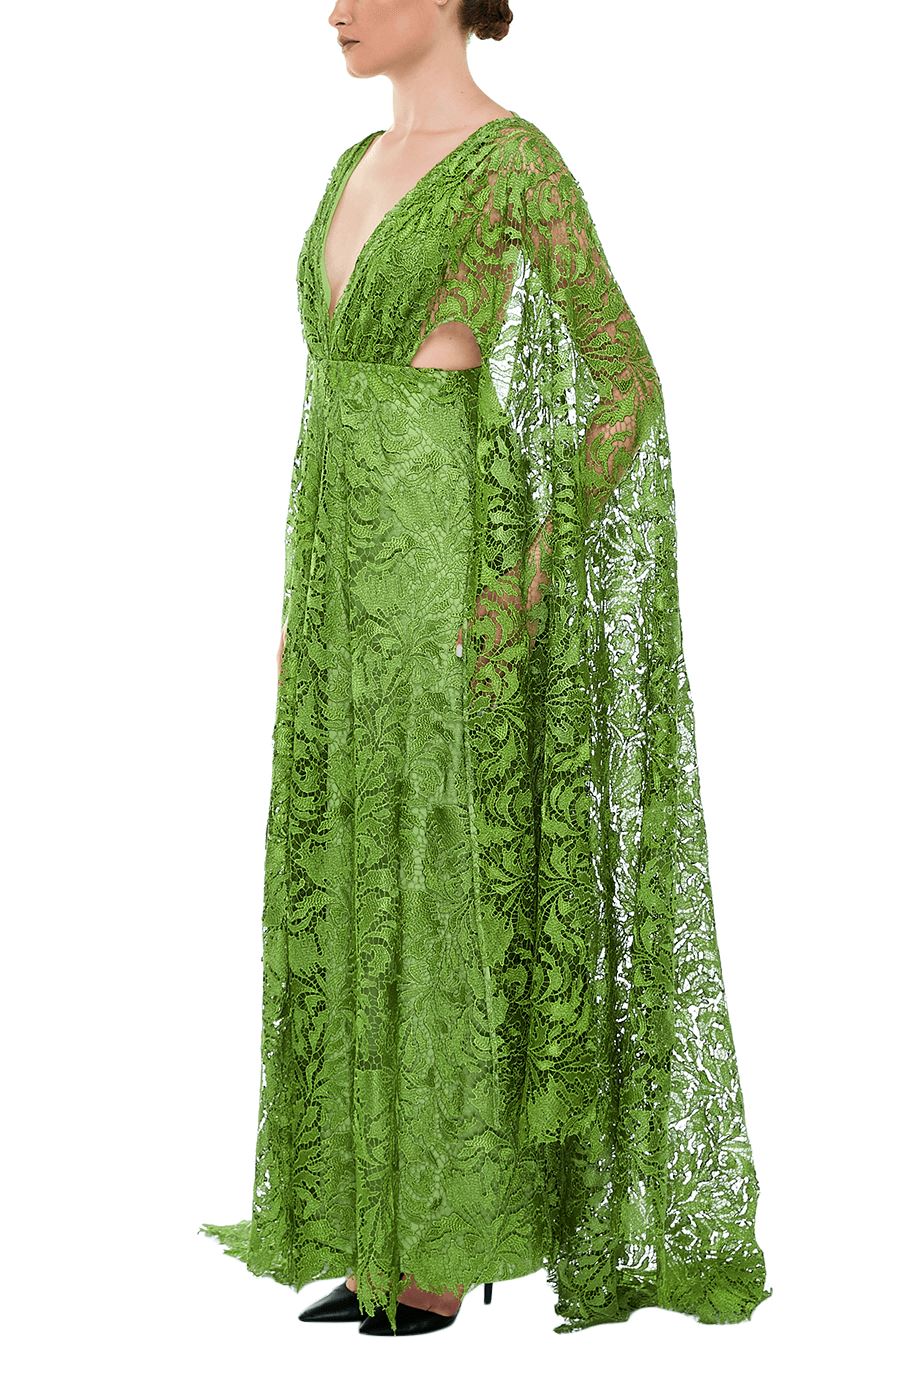 Lime Enid Dress - Damaged Or Sample Items